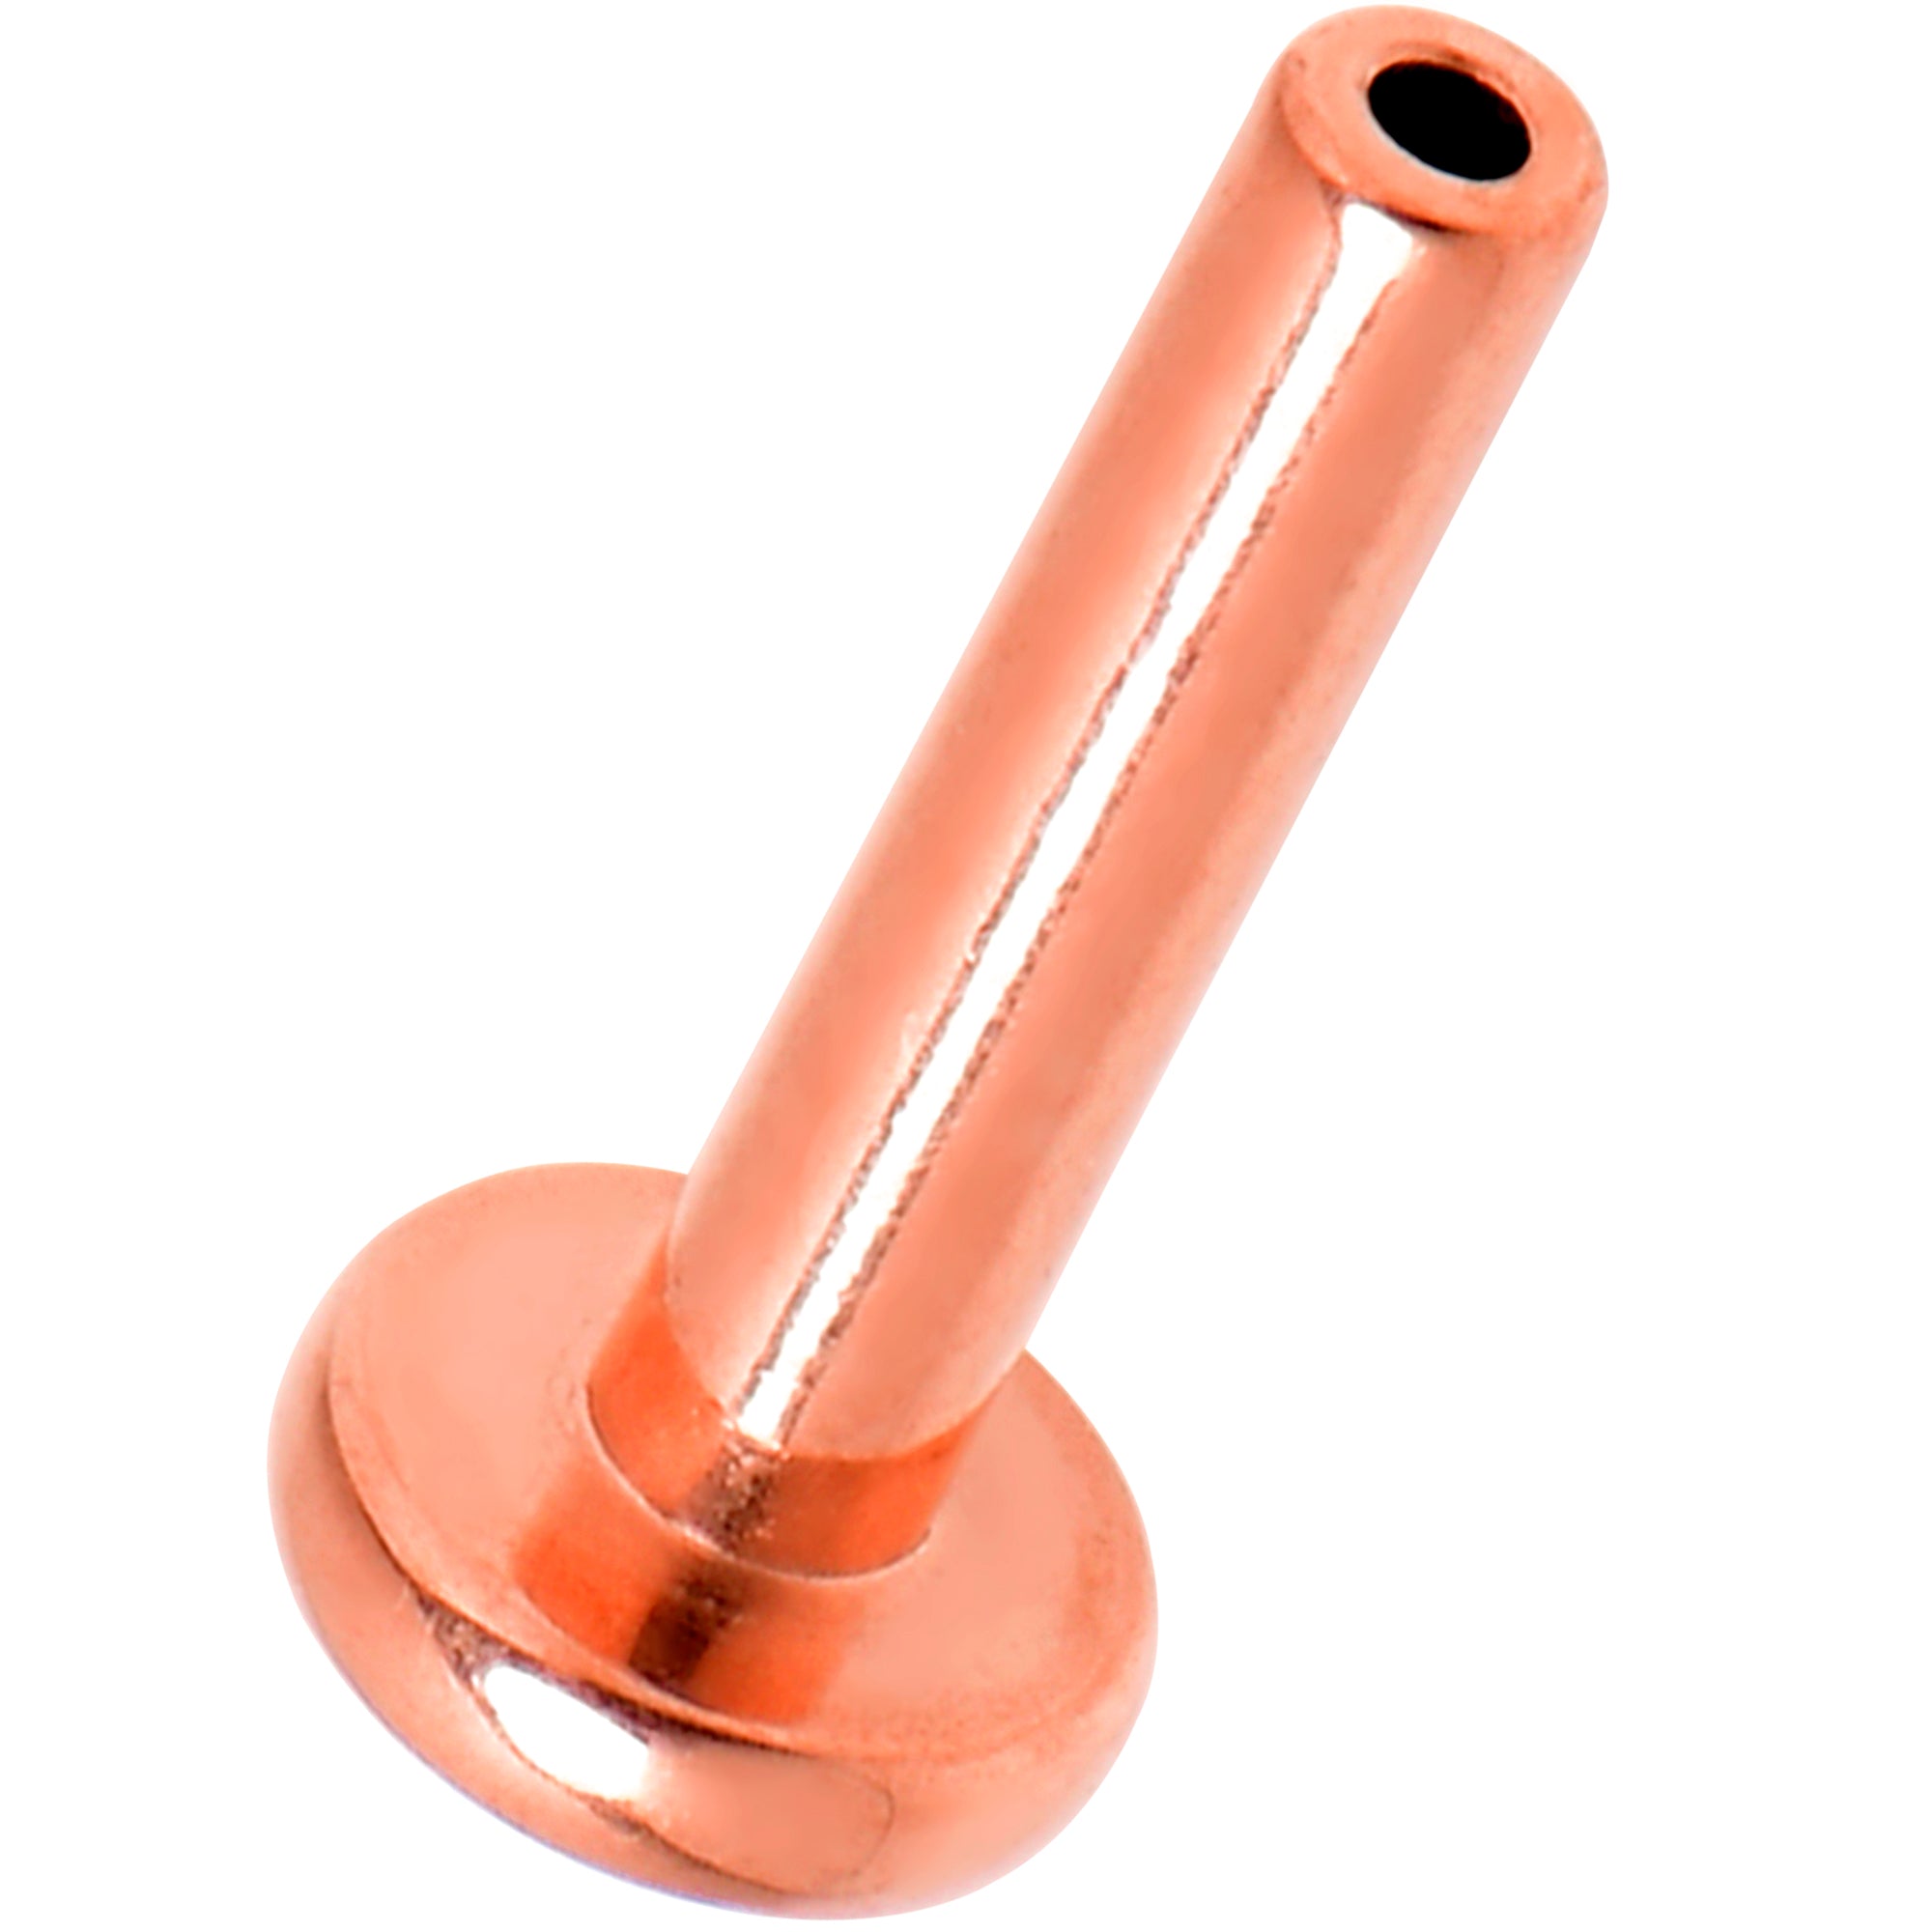 16 Gauge 1/4 Rosy Tone ASTM F-136 Implant Grade Titanium Threadless Post Only Labret